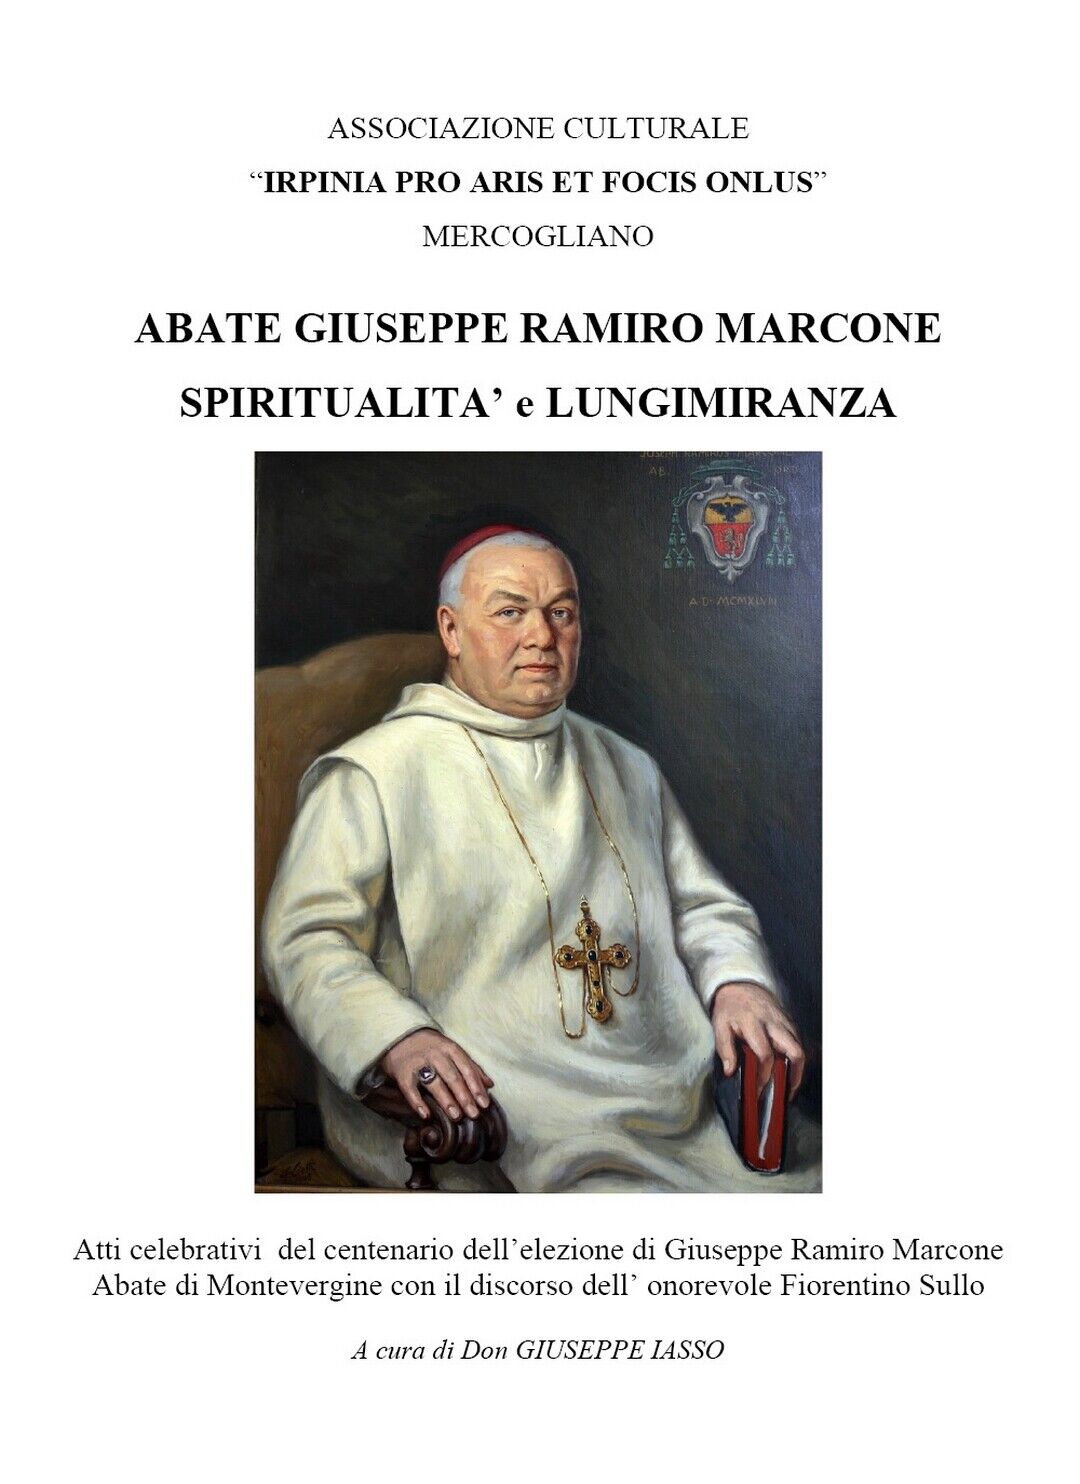 Abate GIUSEPPE RAMIRO MARCONE spiritualit? e lungimiranza  di Giuseppe Iasso